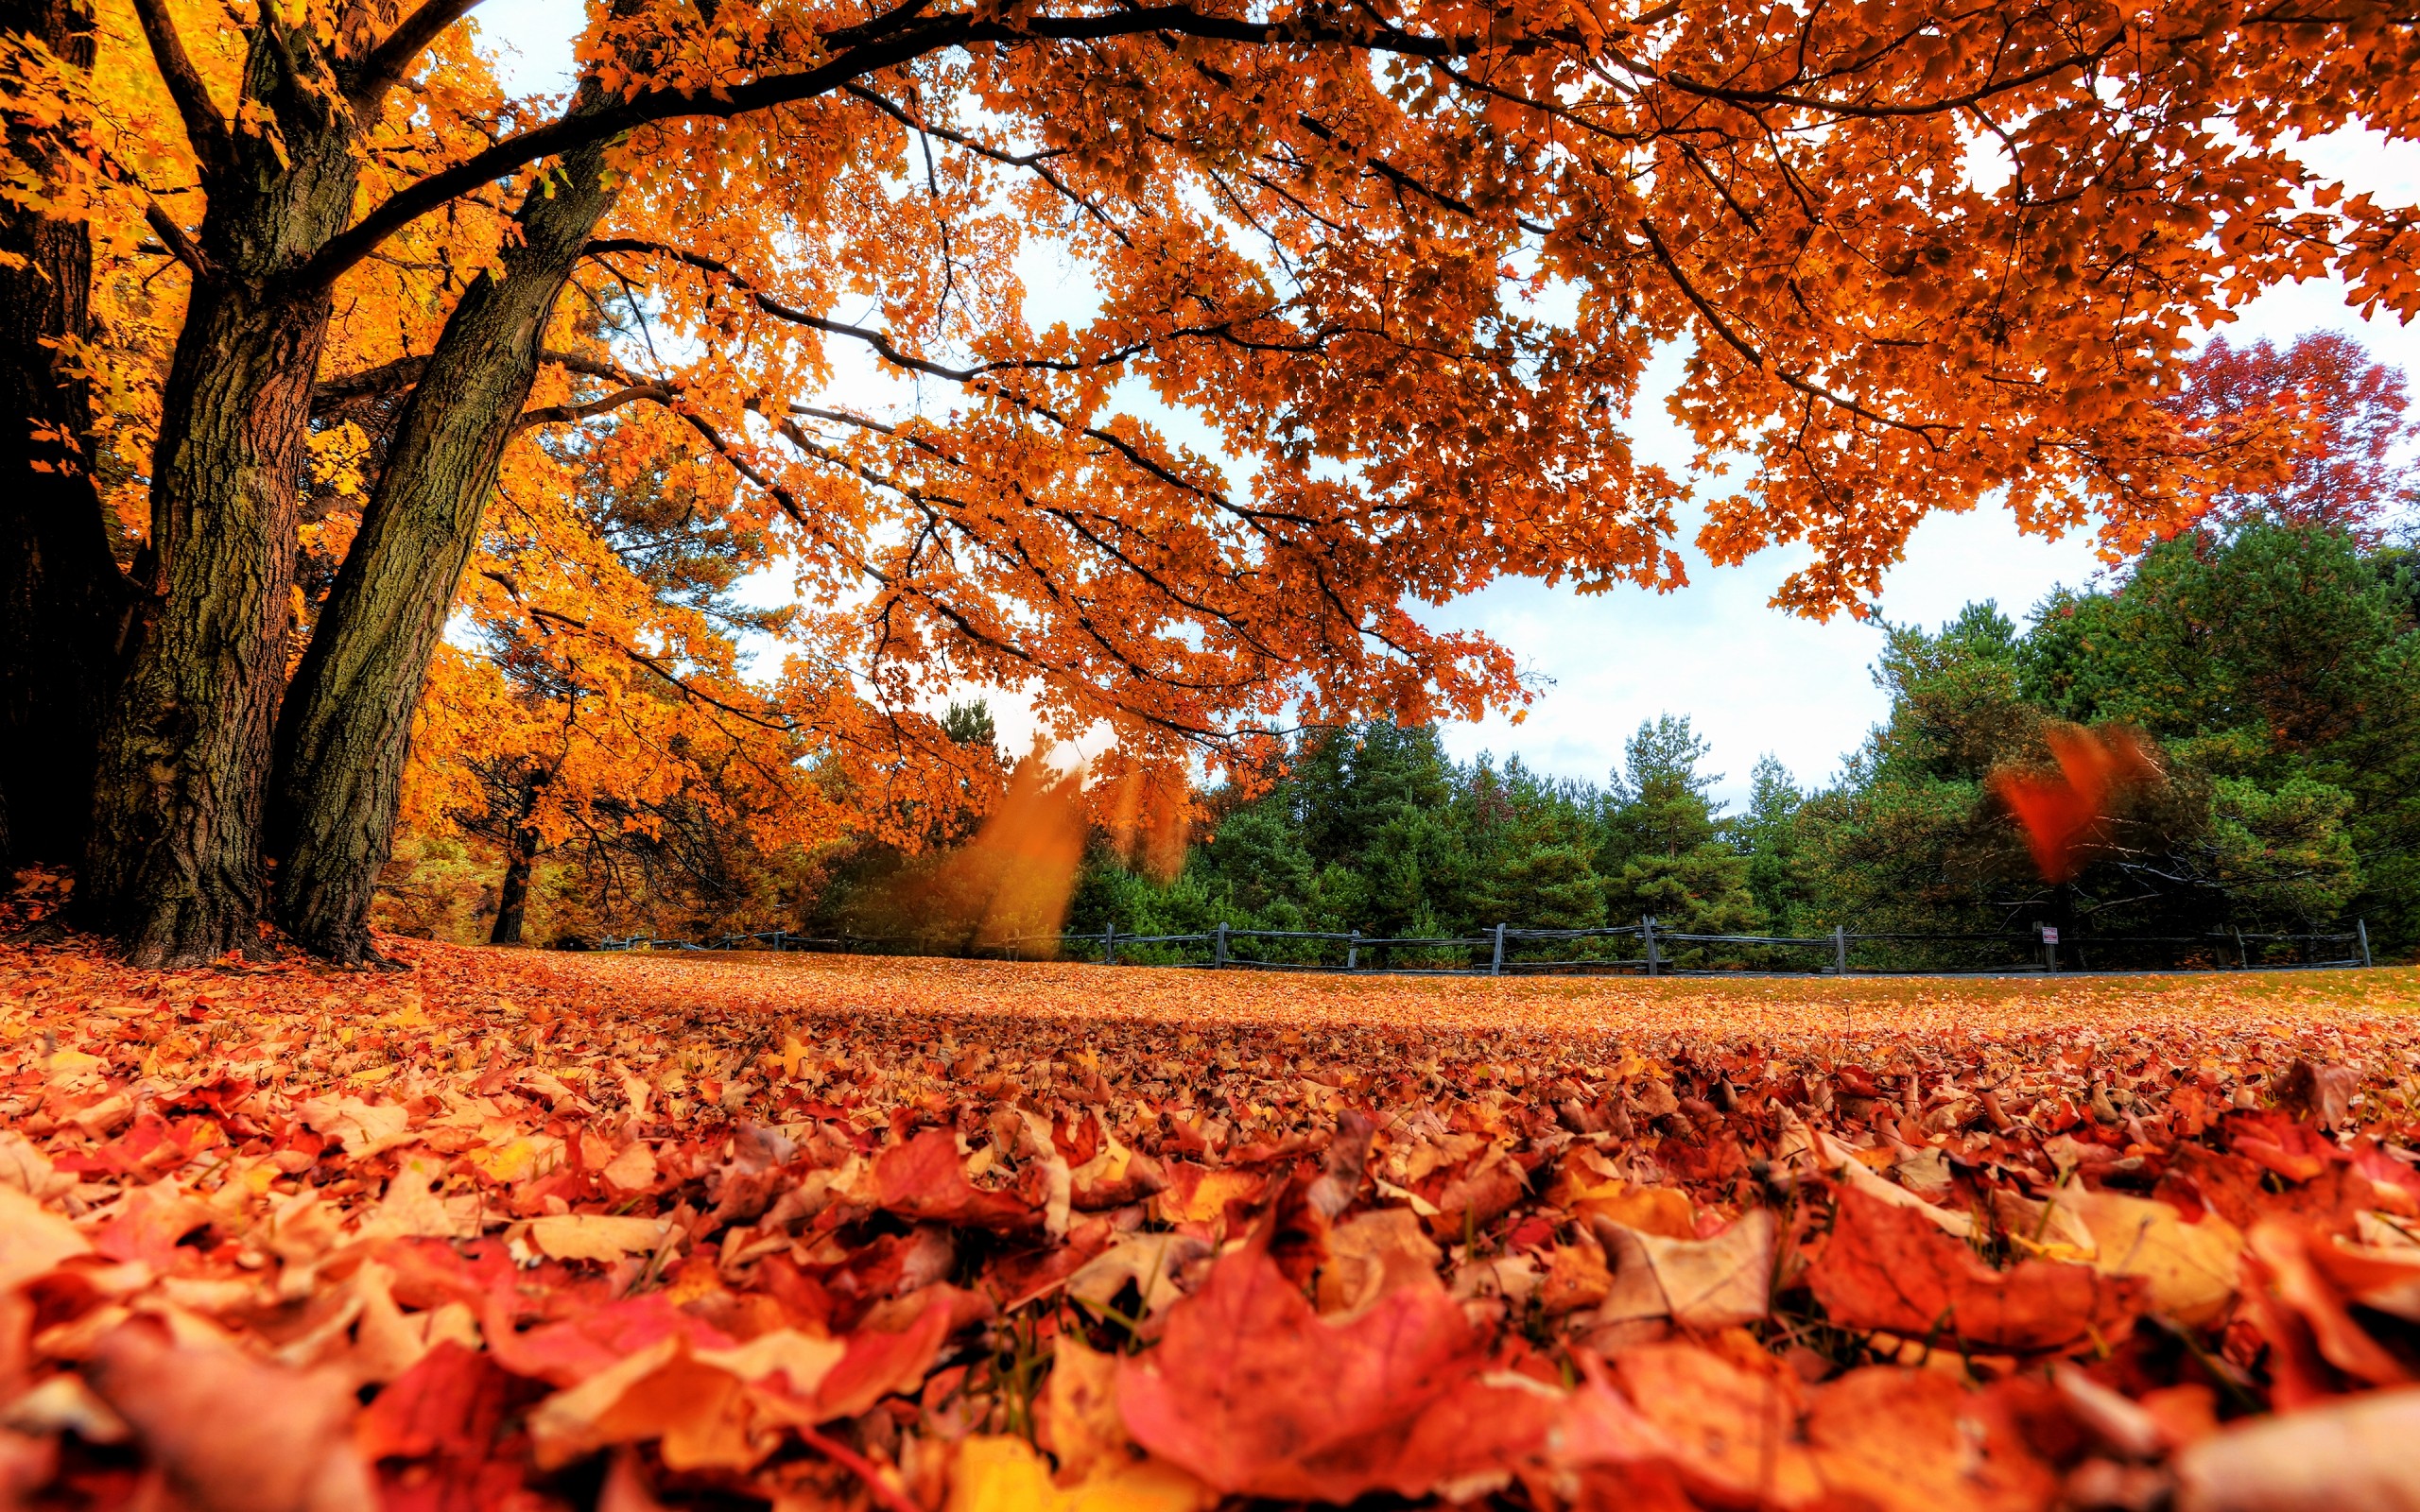 landscapes, Nature, Trees, Autumn, season, Red, Forest, Orange, Canada, Parks, Fallen, Leaves, Autumn Wallpaper HD / Desktop and Mobile Background